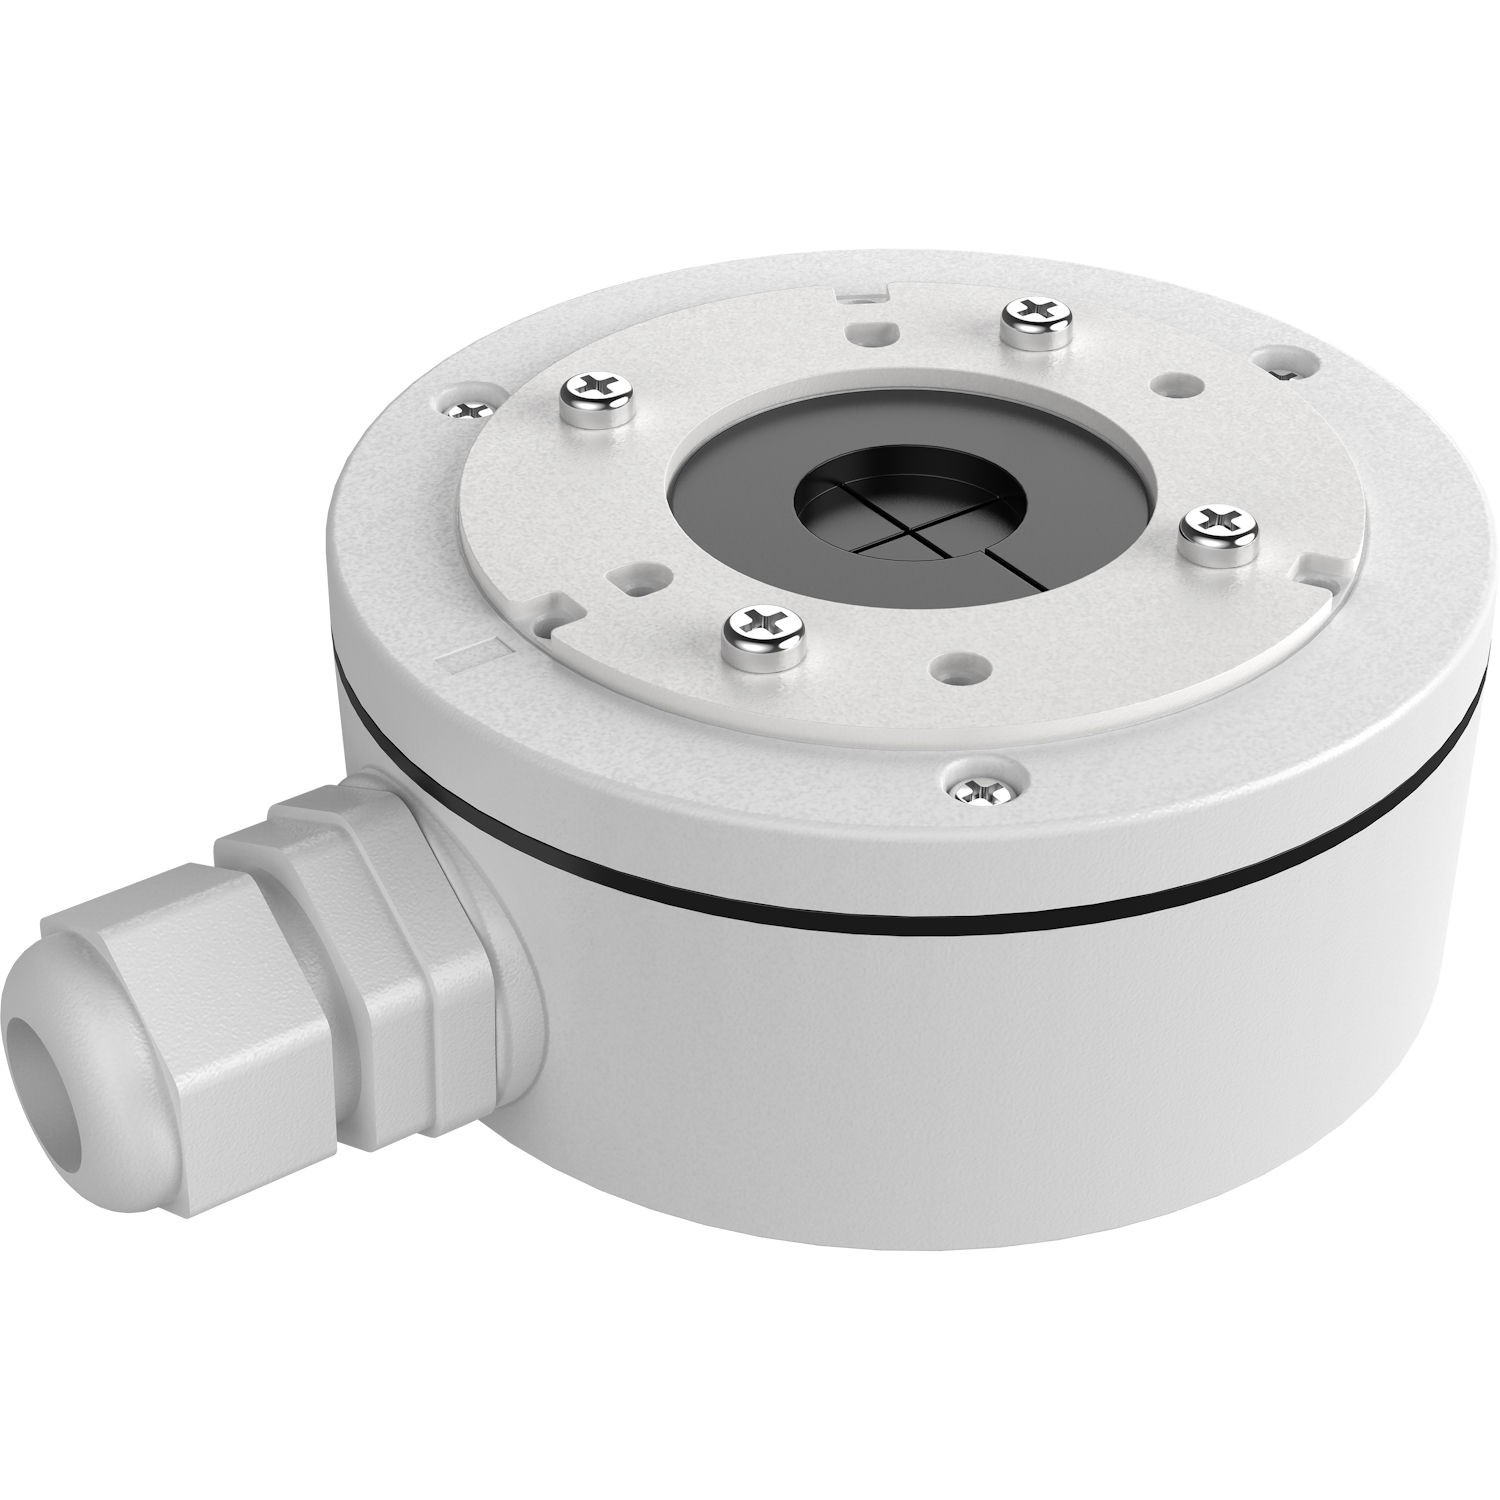 10000201 Backbox blanc pour caméra UltraSync Wifi Bullet